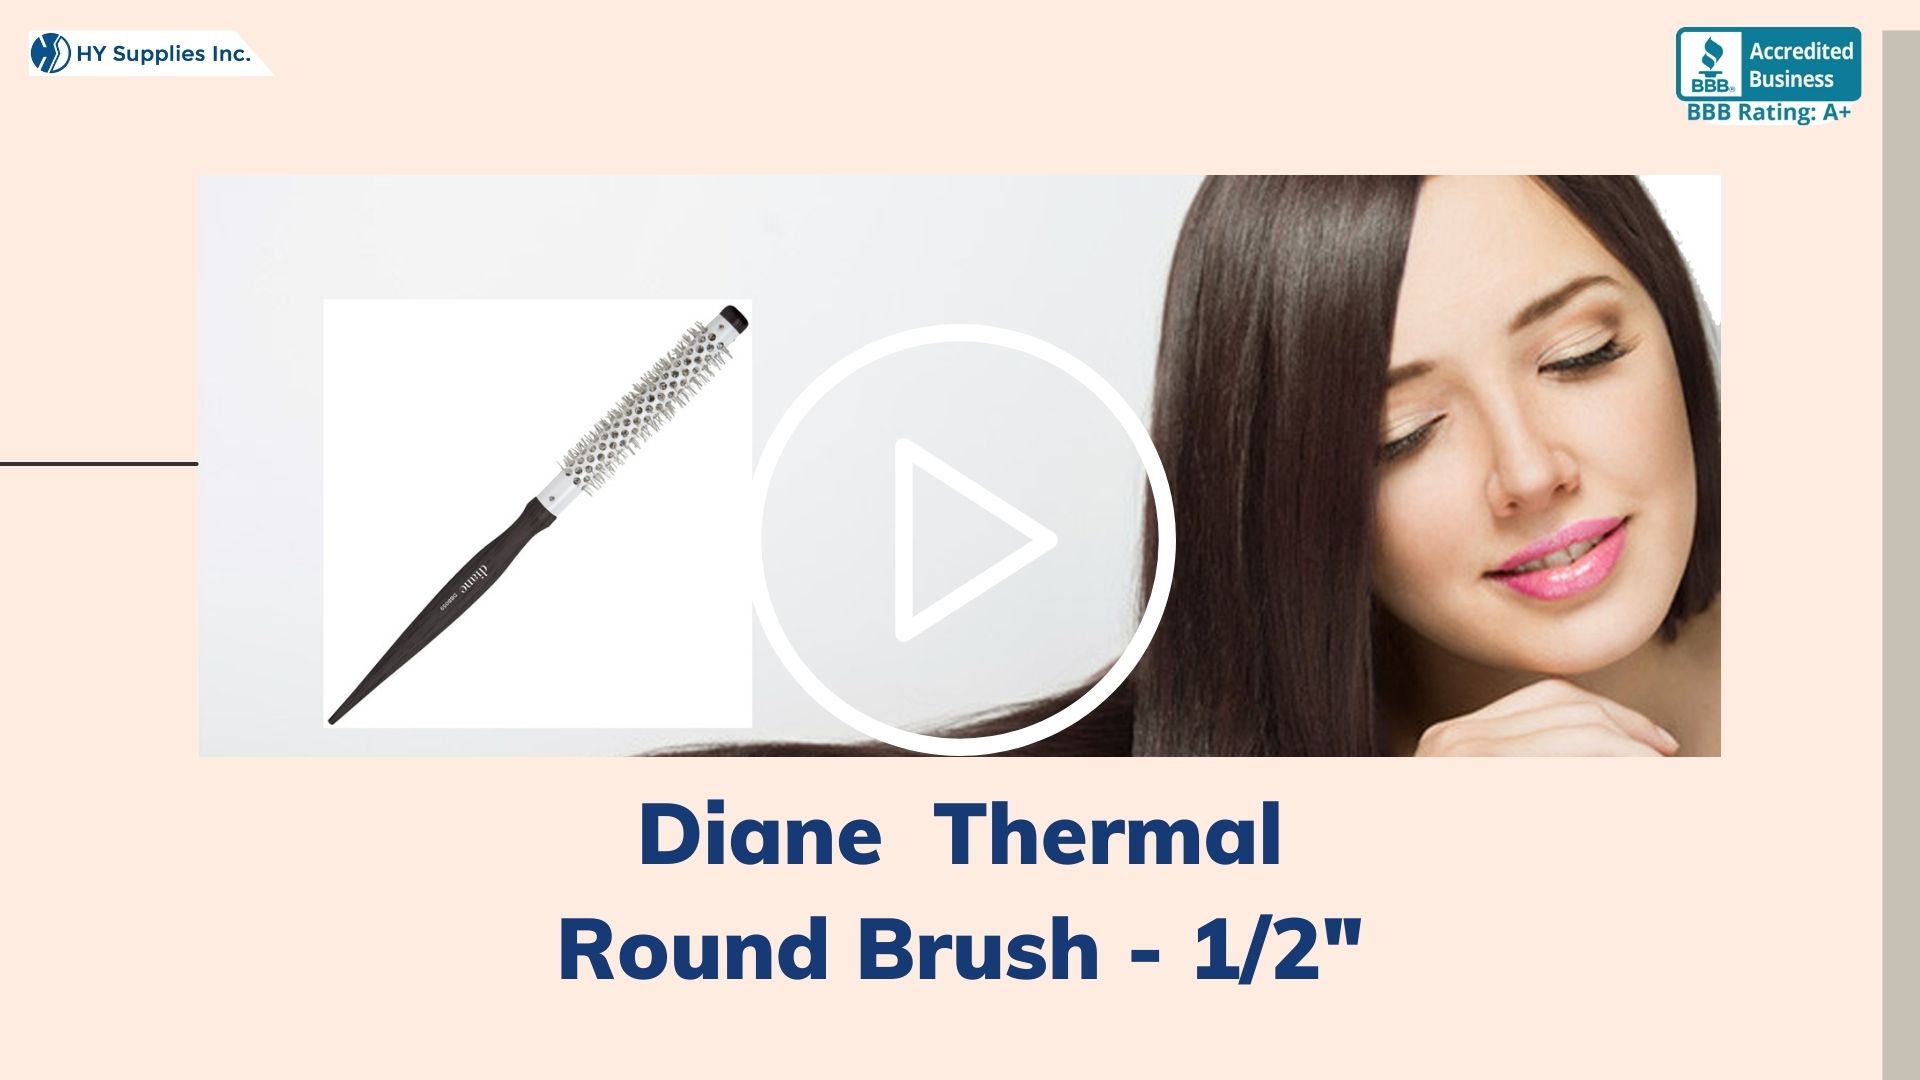 Diane Thermal Round Brush - 1/2""